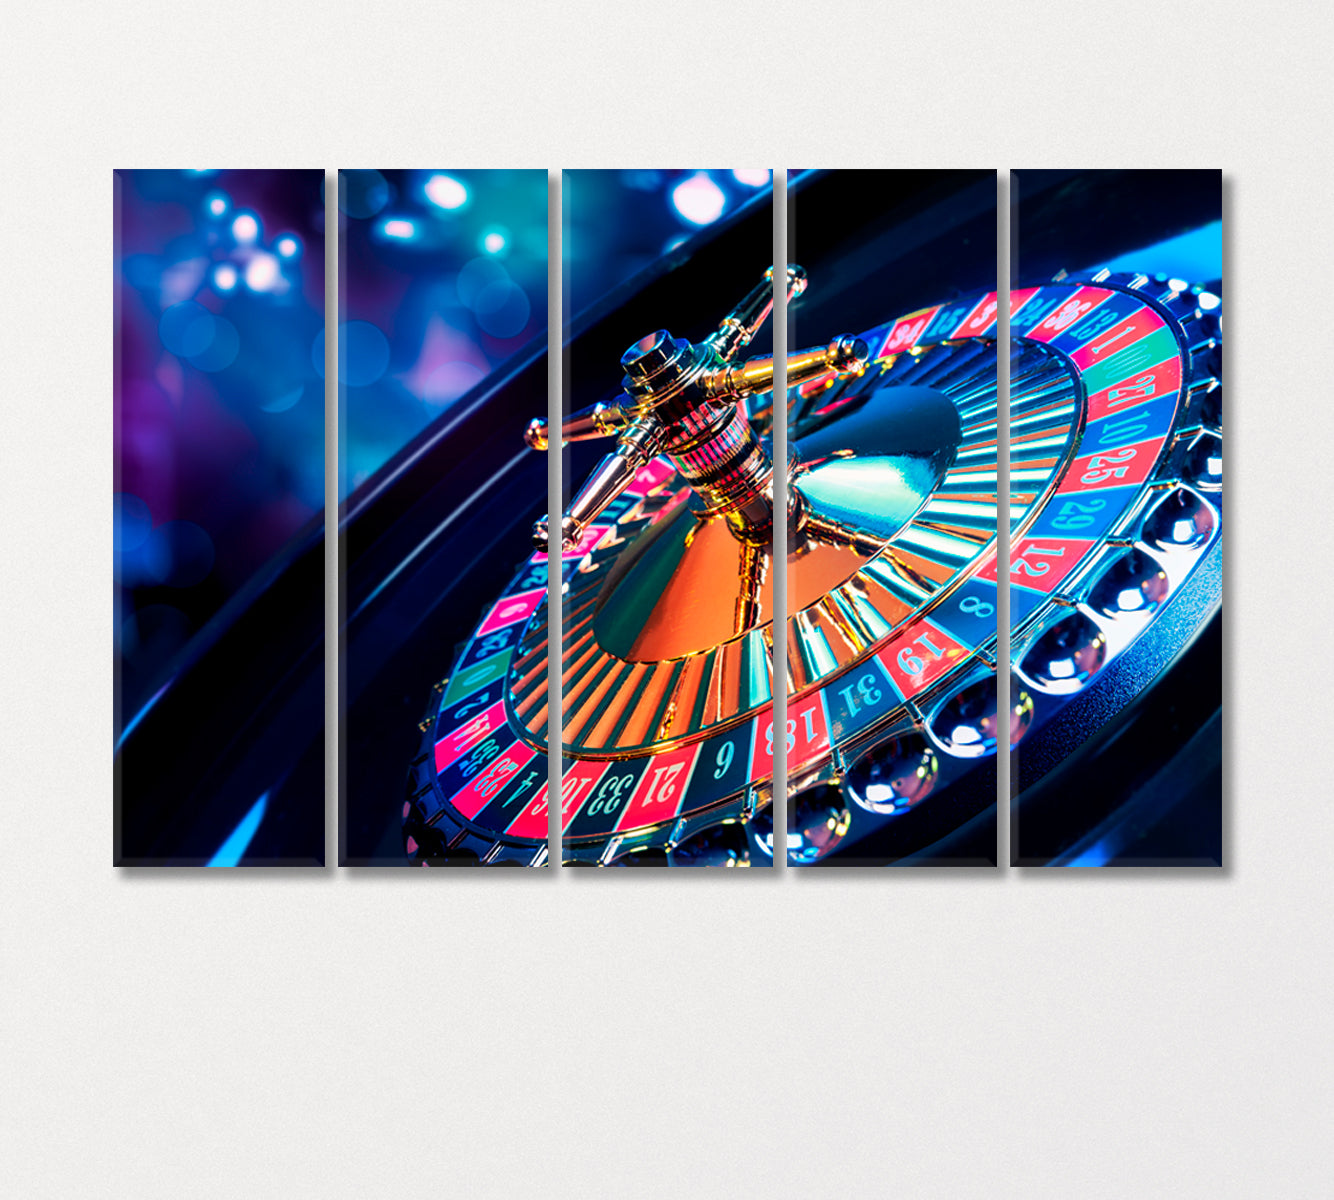 Spinning Сasino Roulette Canvas Print-Canvas Print-CetArt-5 Panels-36x24 inches-CetArt